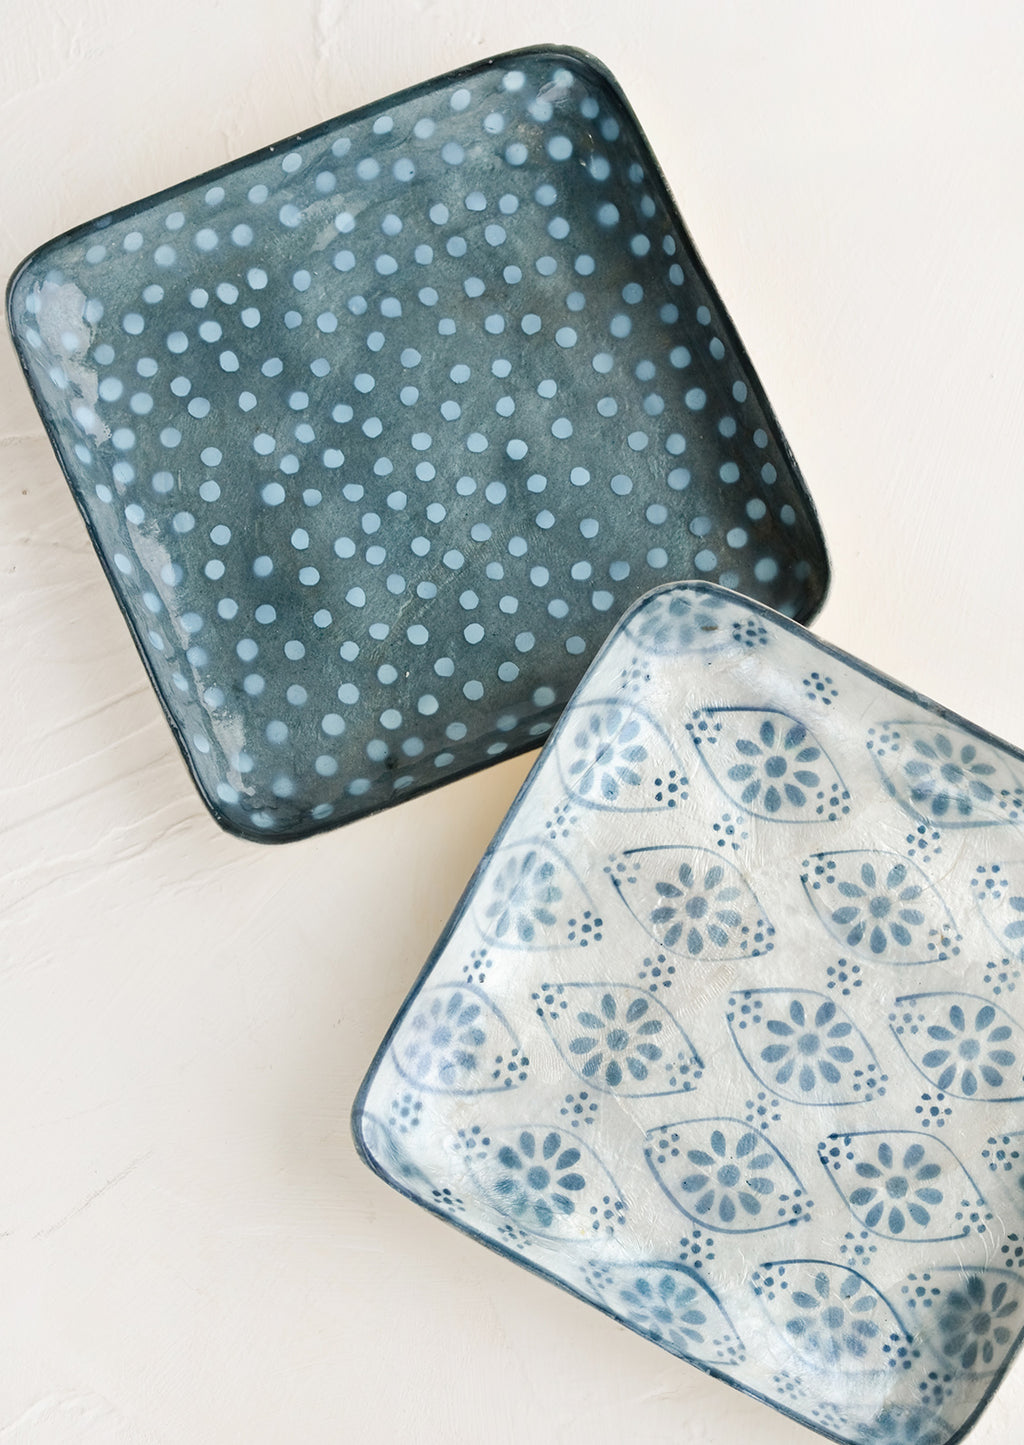 1: Square catchall trays in assorted indigo motifs.